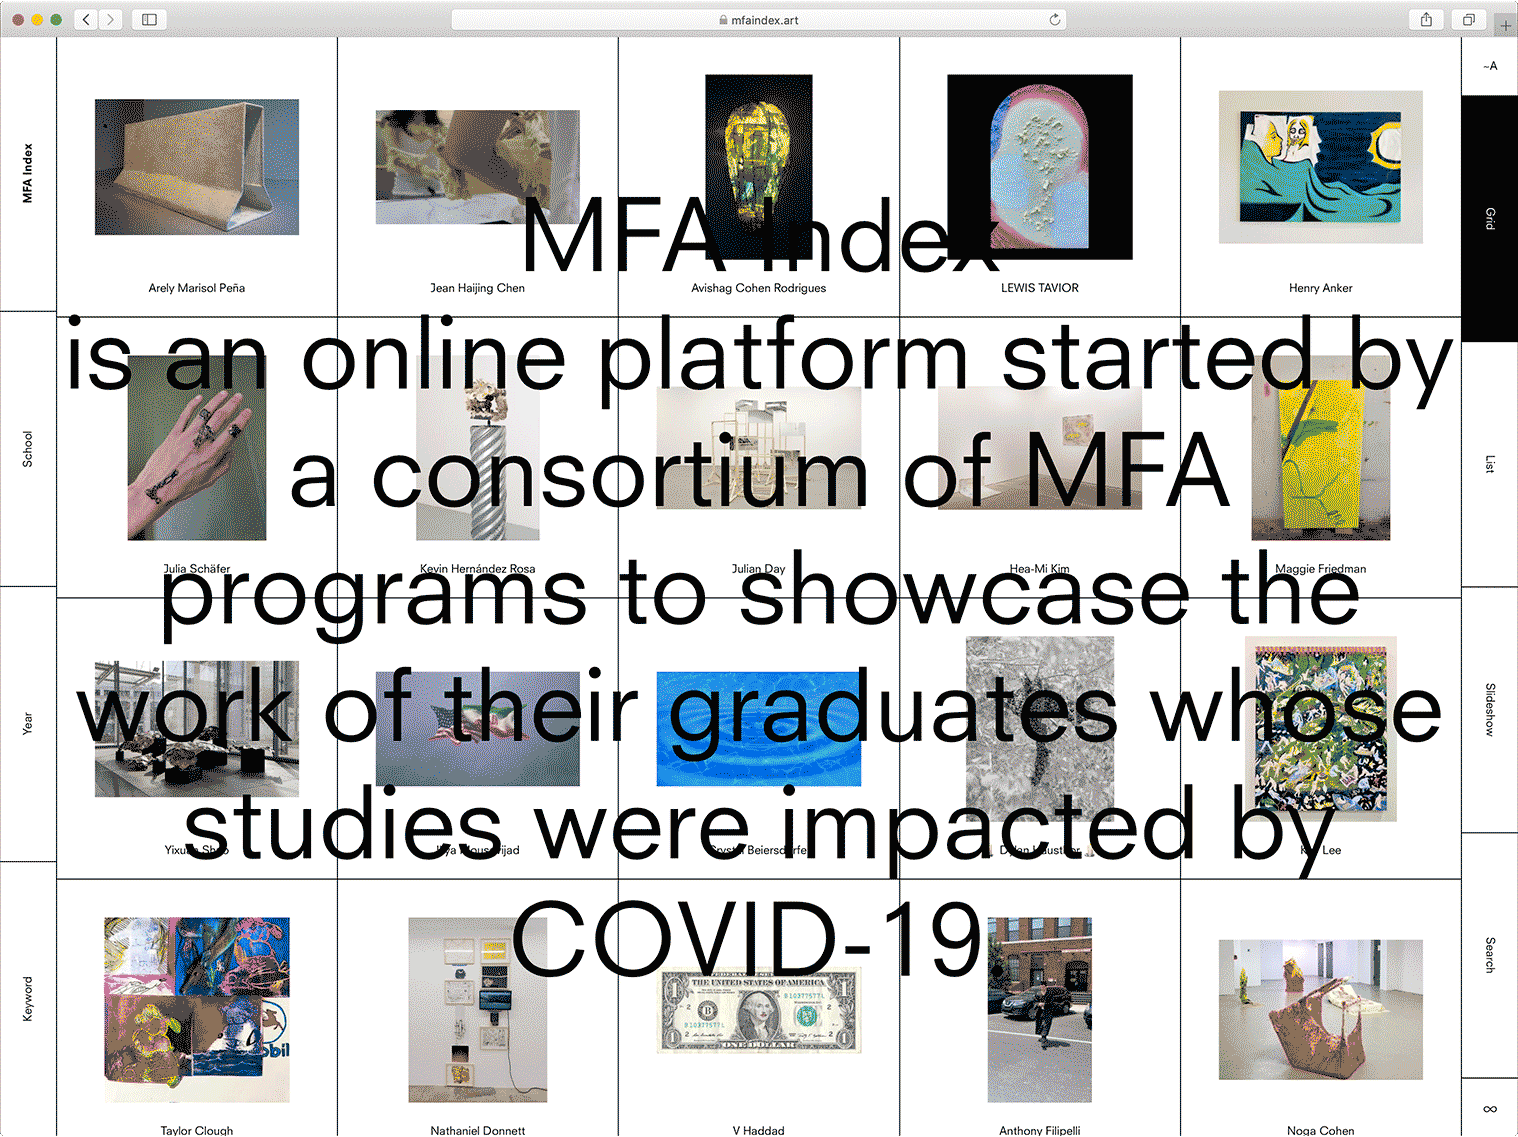 Animated screencaps of mfaindex.art website